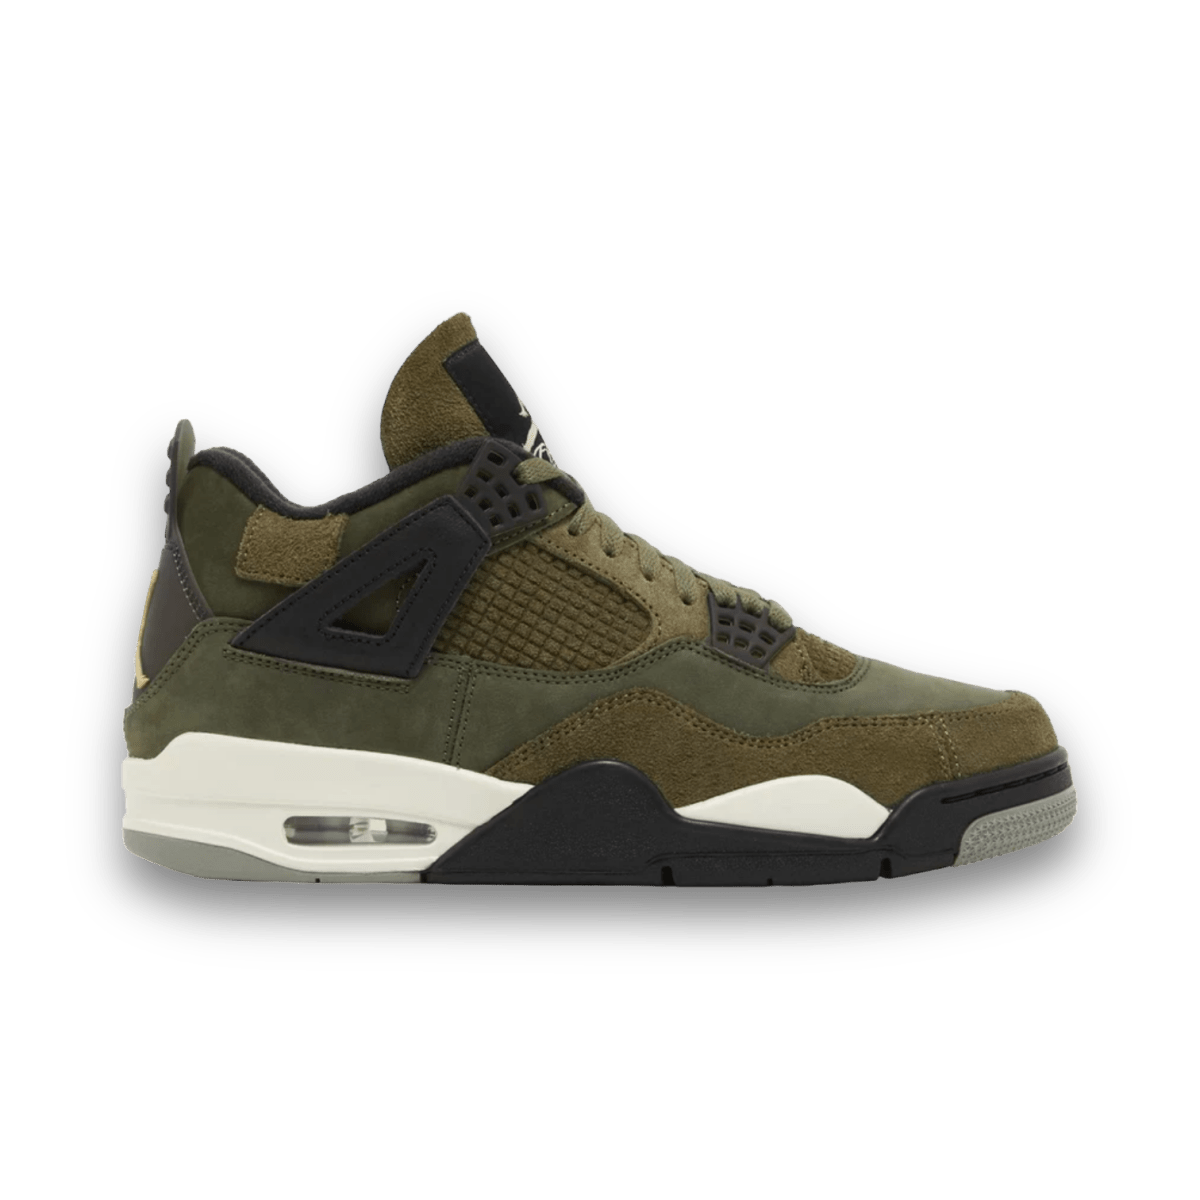 Air Jordan 4 Retro SE 'Craft - Olive' - Mid Sneaker - Jordan - Jawns on Fire - sneakers